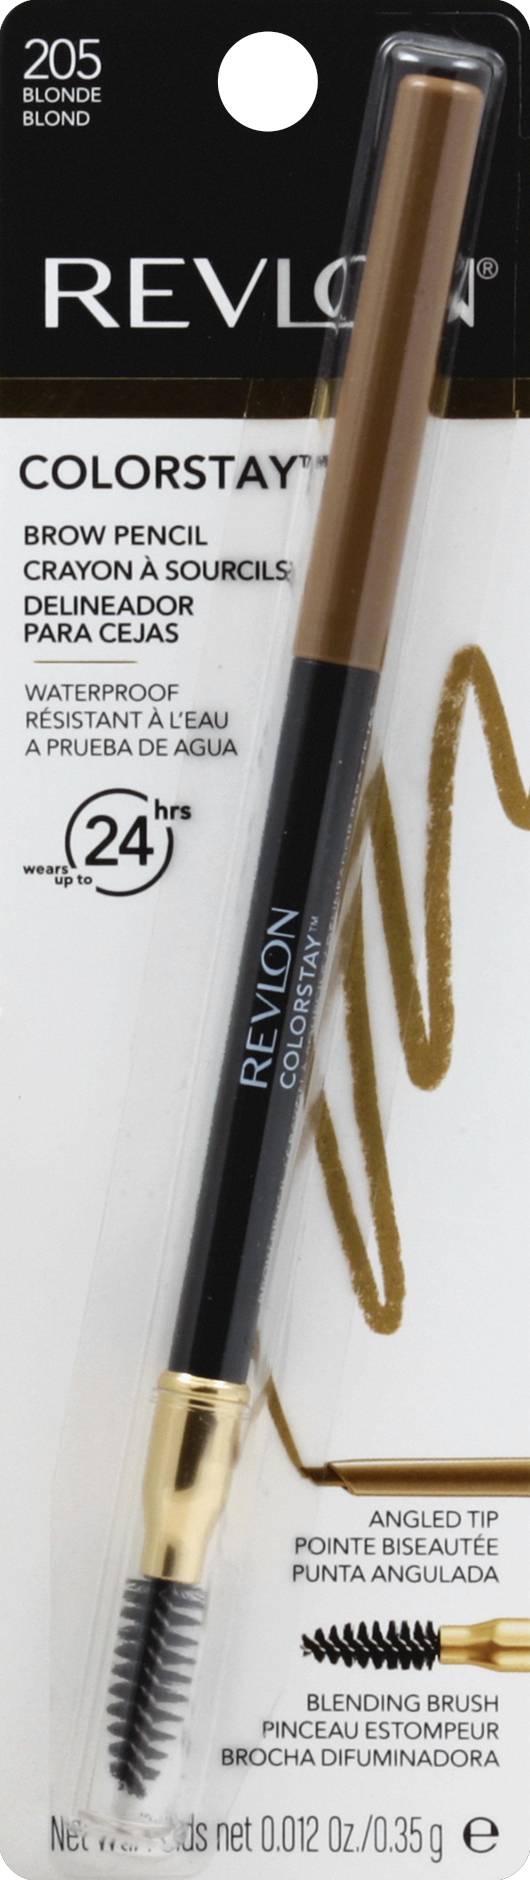 Revlon 205 Blonde Colorstay Brow Pencil